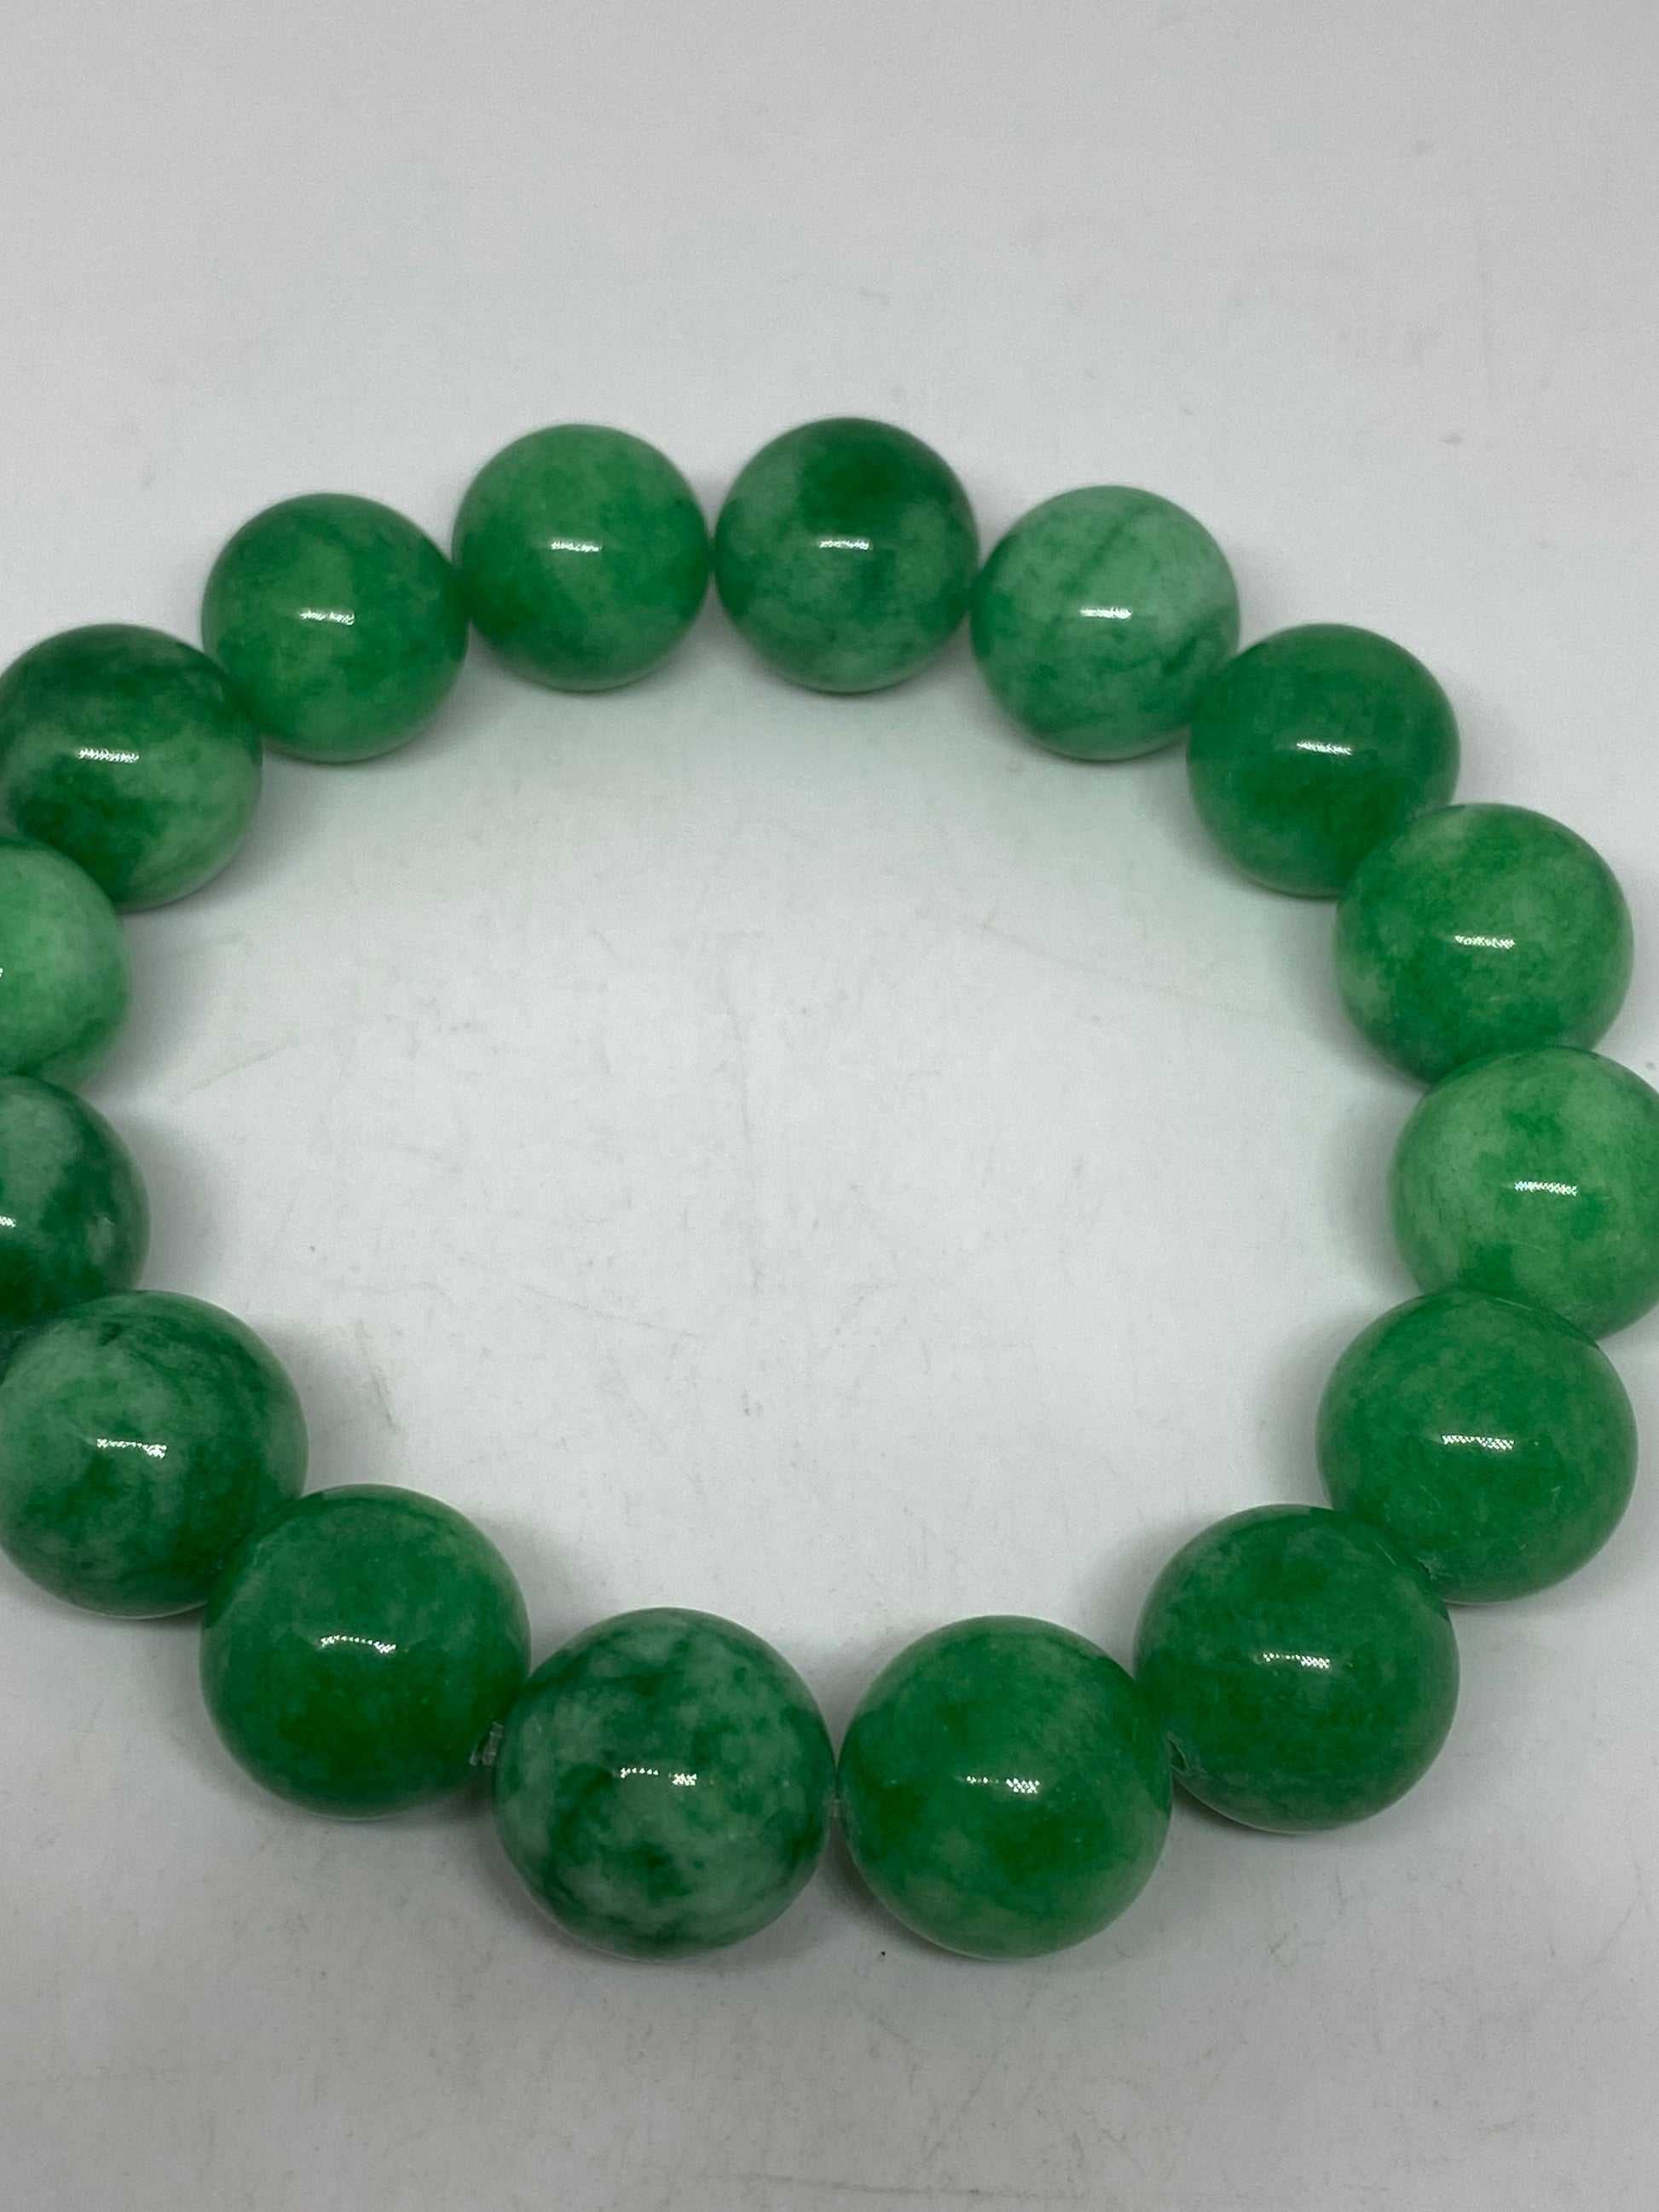 Vintage Fun Green Jade Lucky Stretch Bracelet